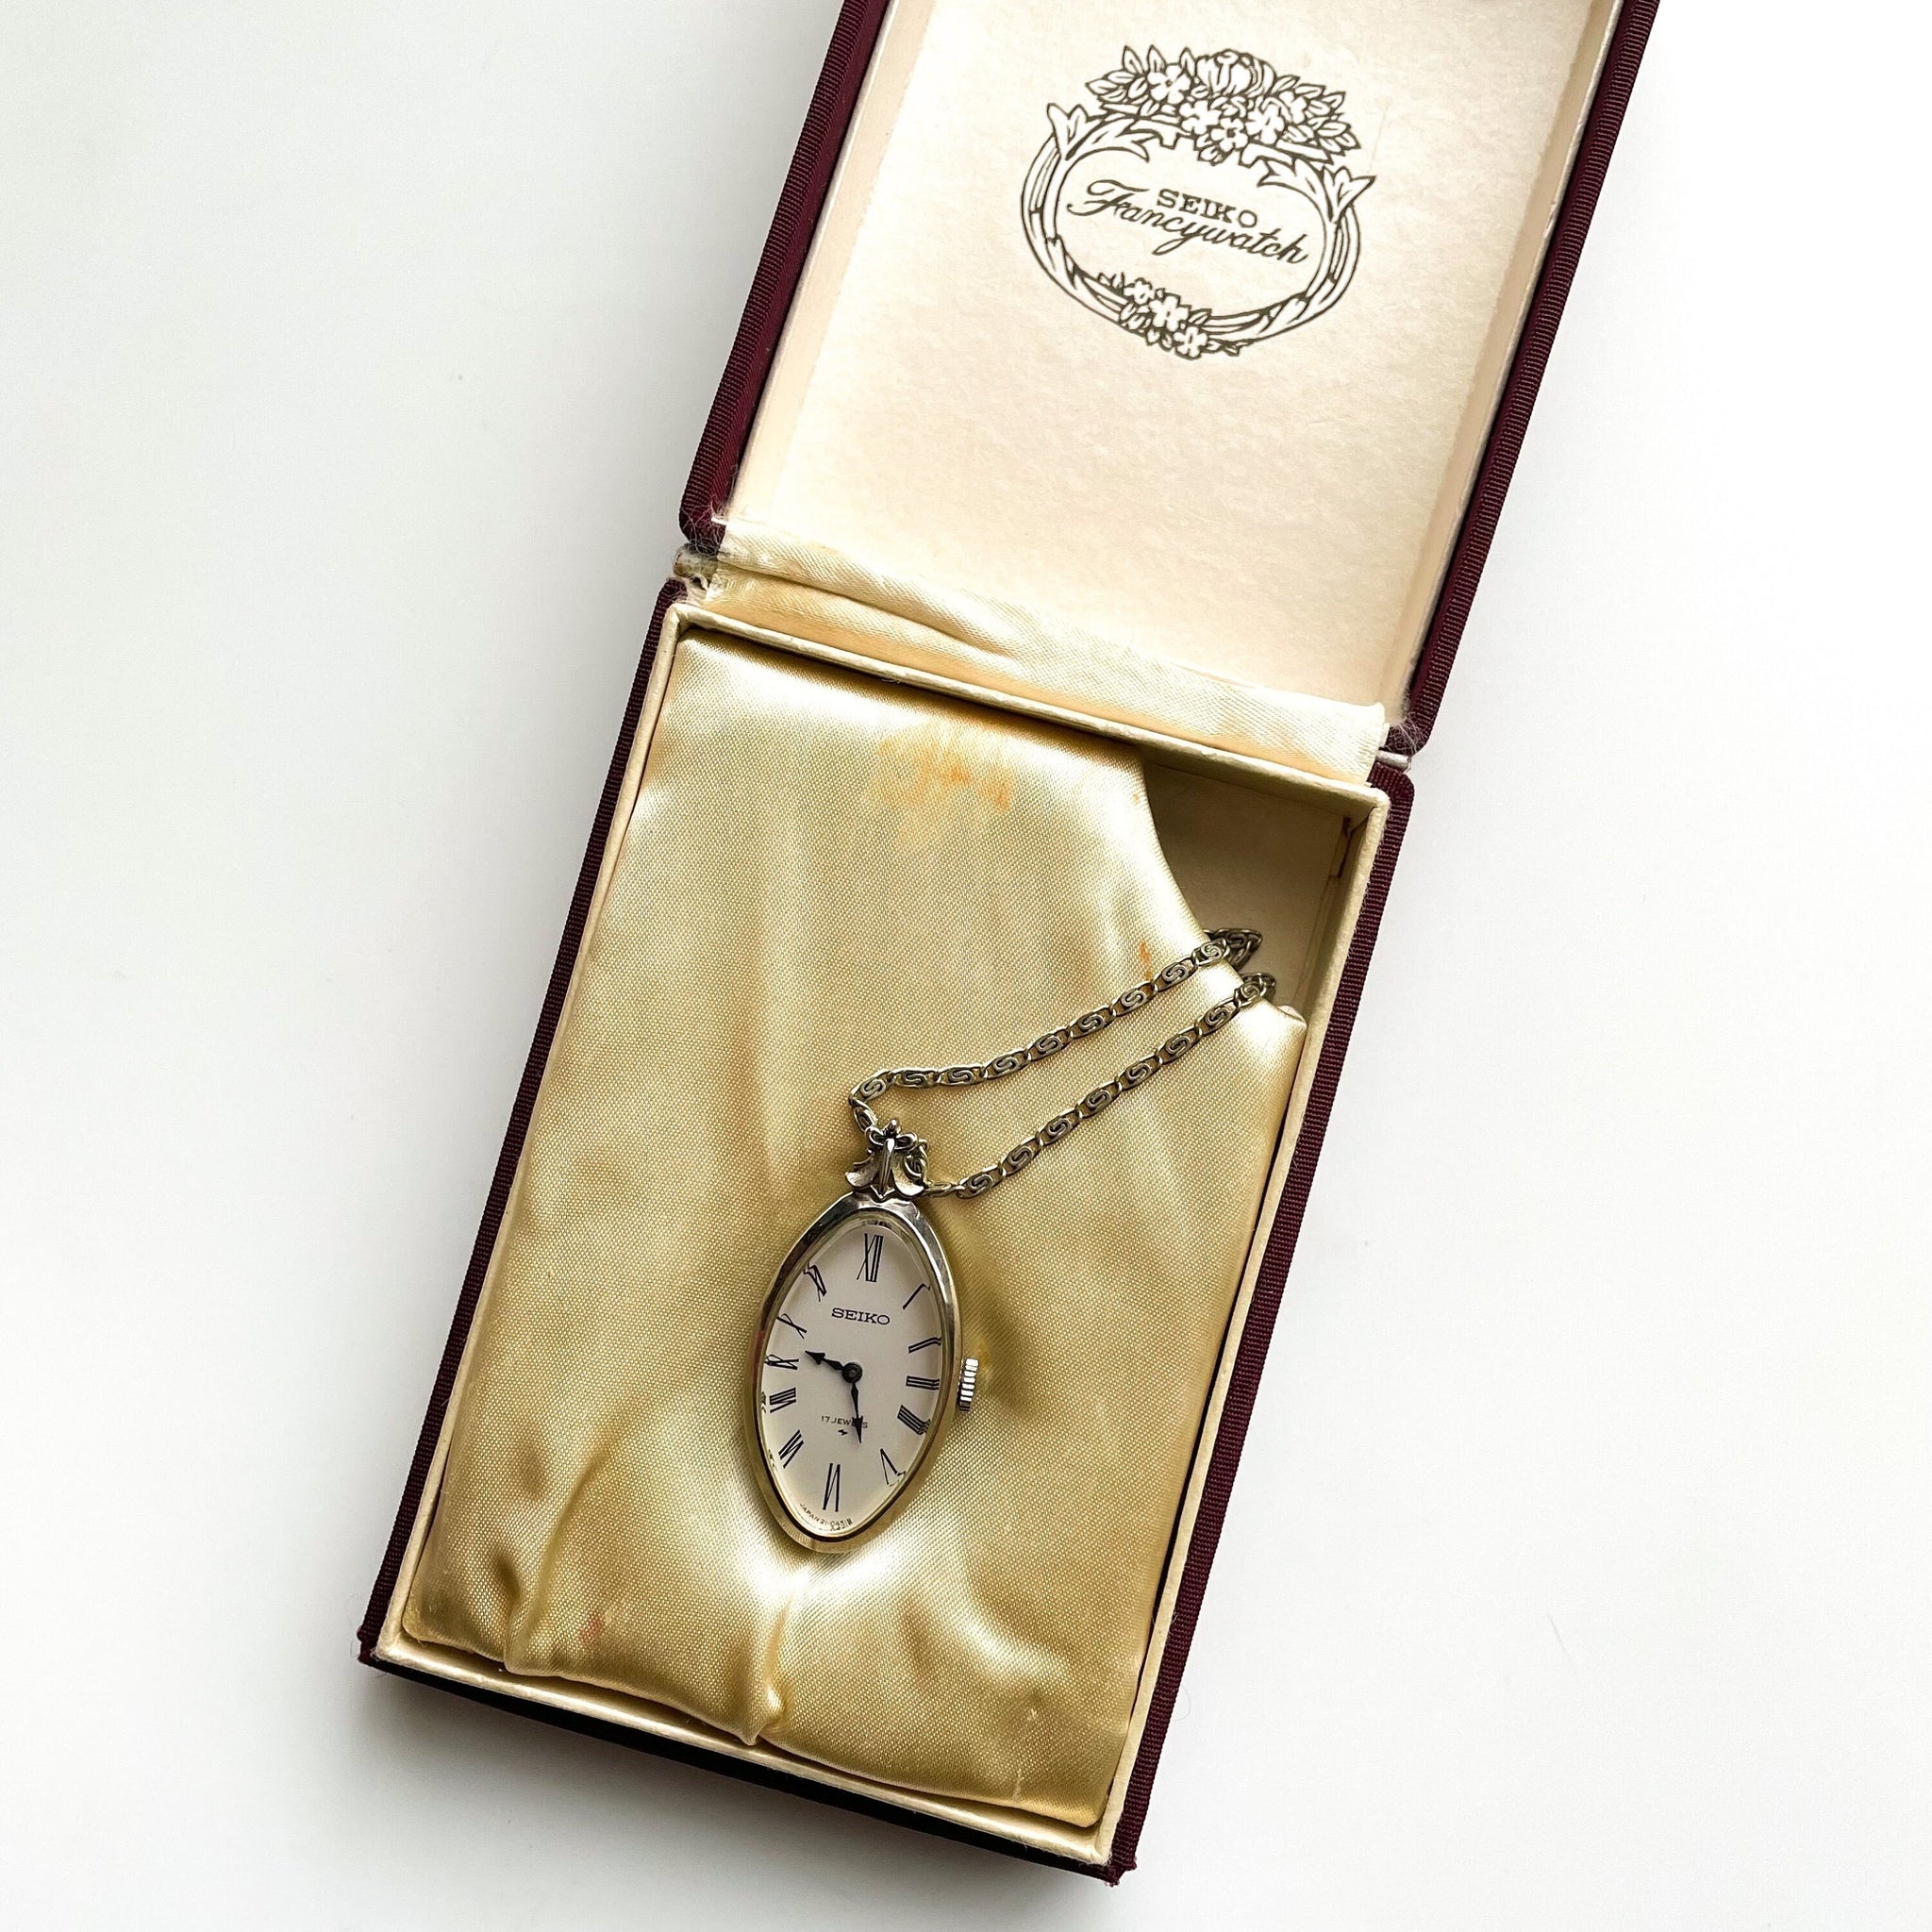 Pendant silver (925) with quartz movement “Seiko” and Diamond - IK sieraden